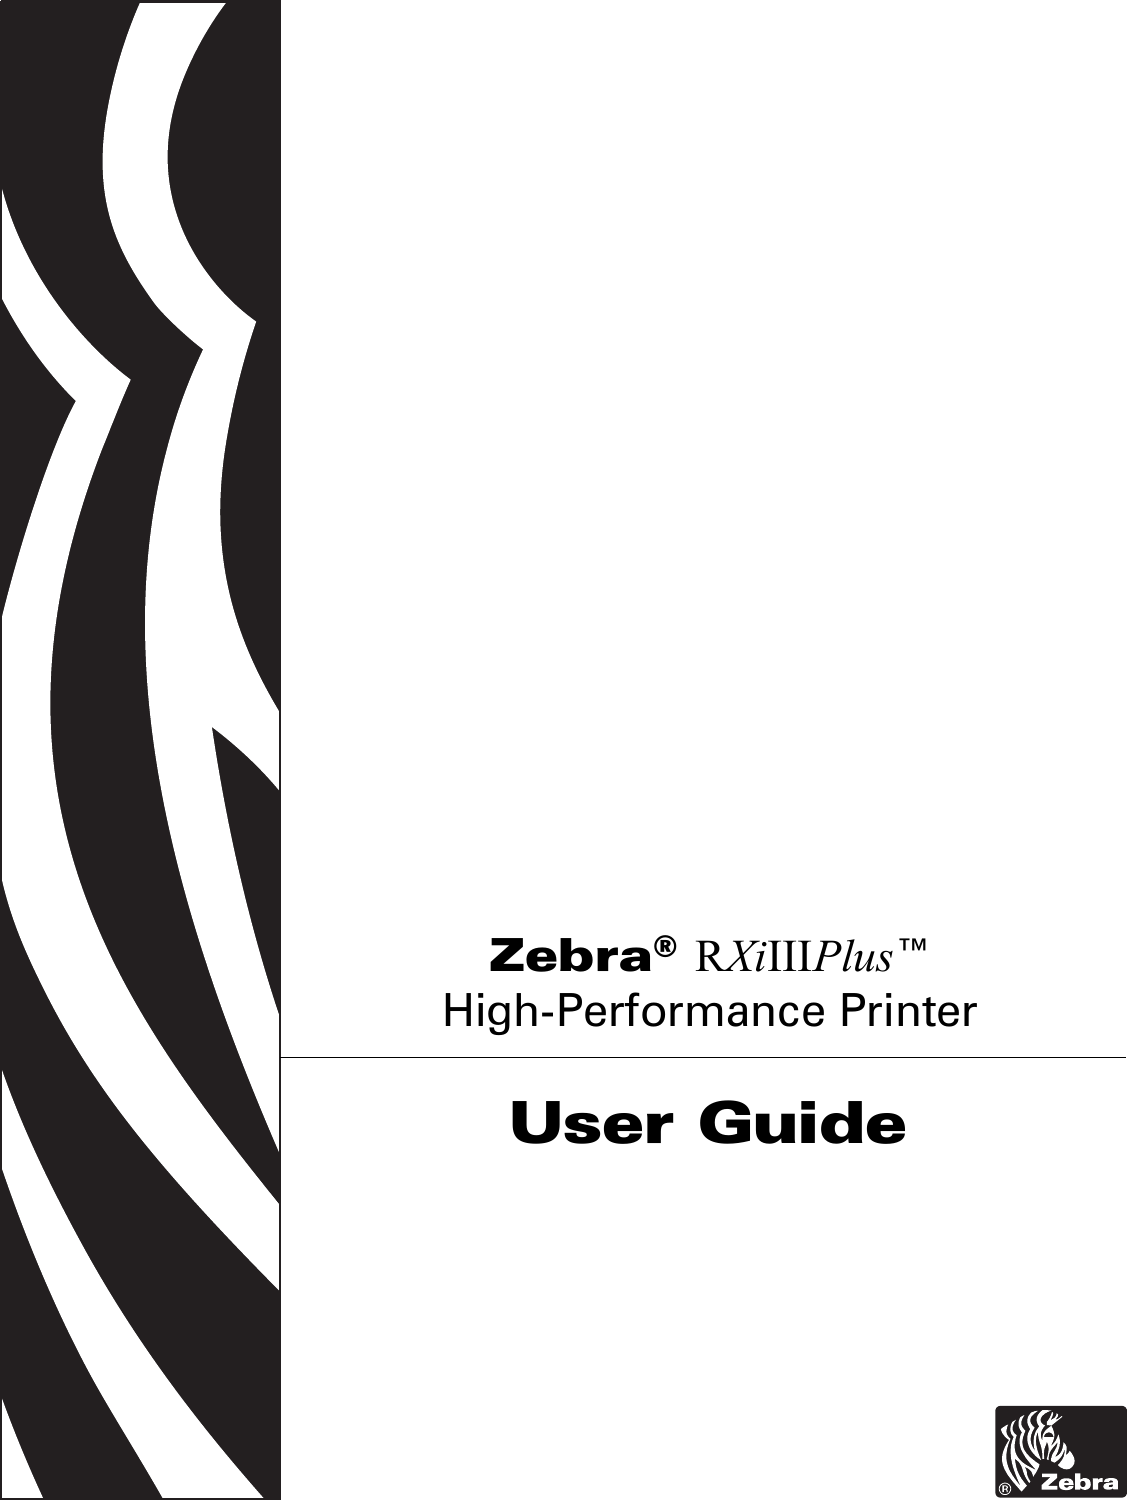  Zebra® RXiIIIPlus™High-Performance PrinterUser Guide